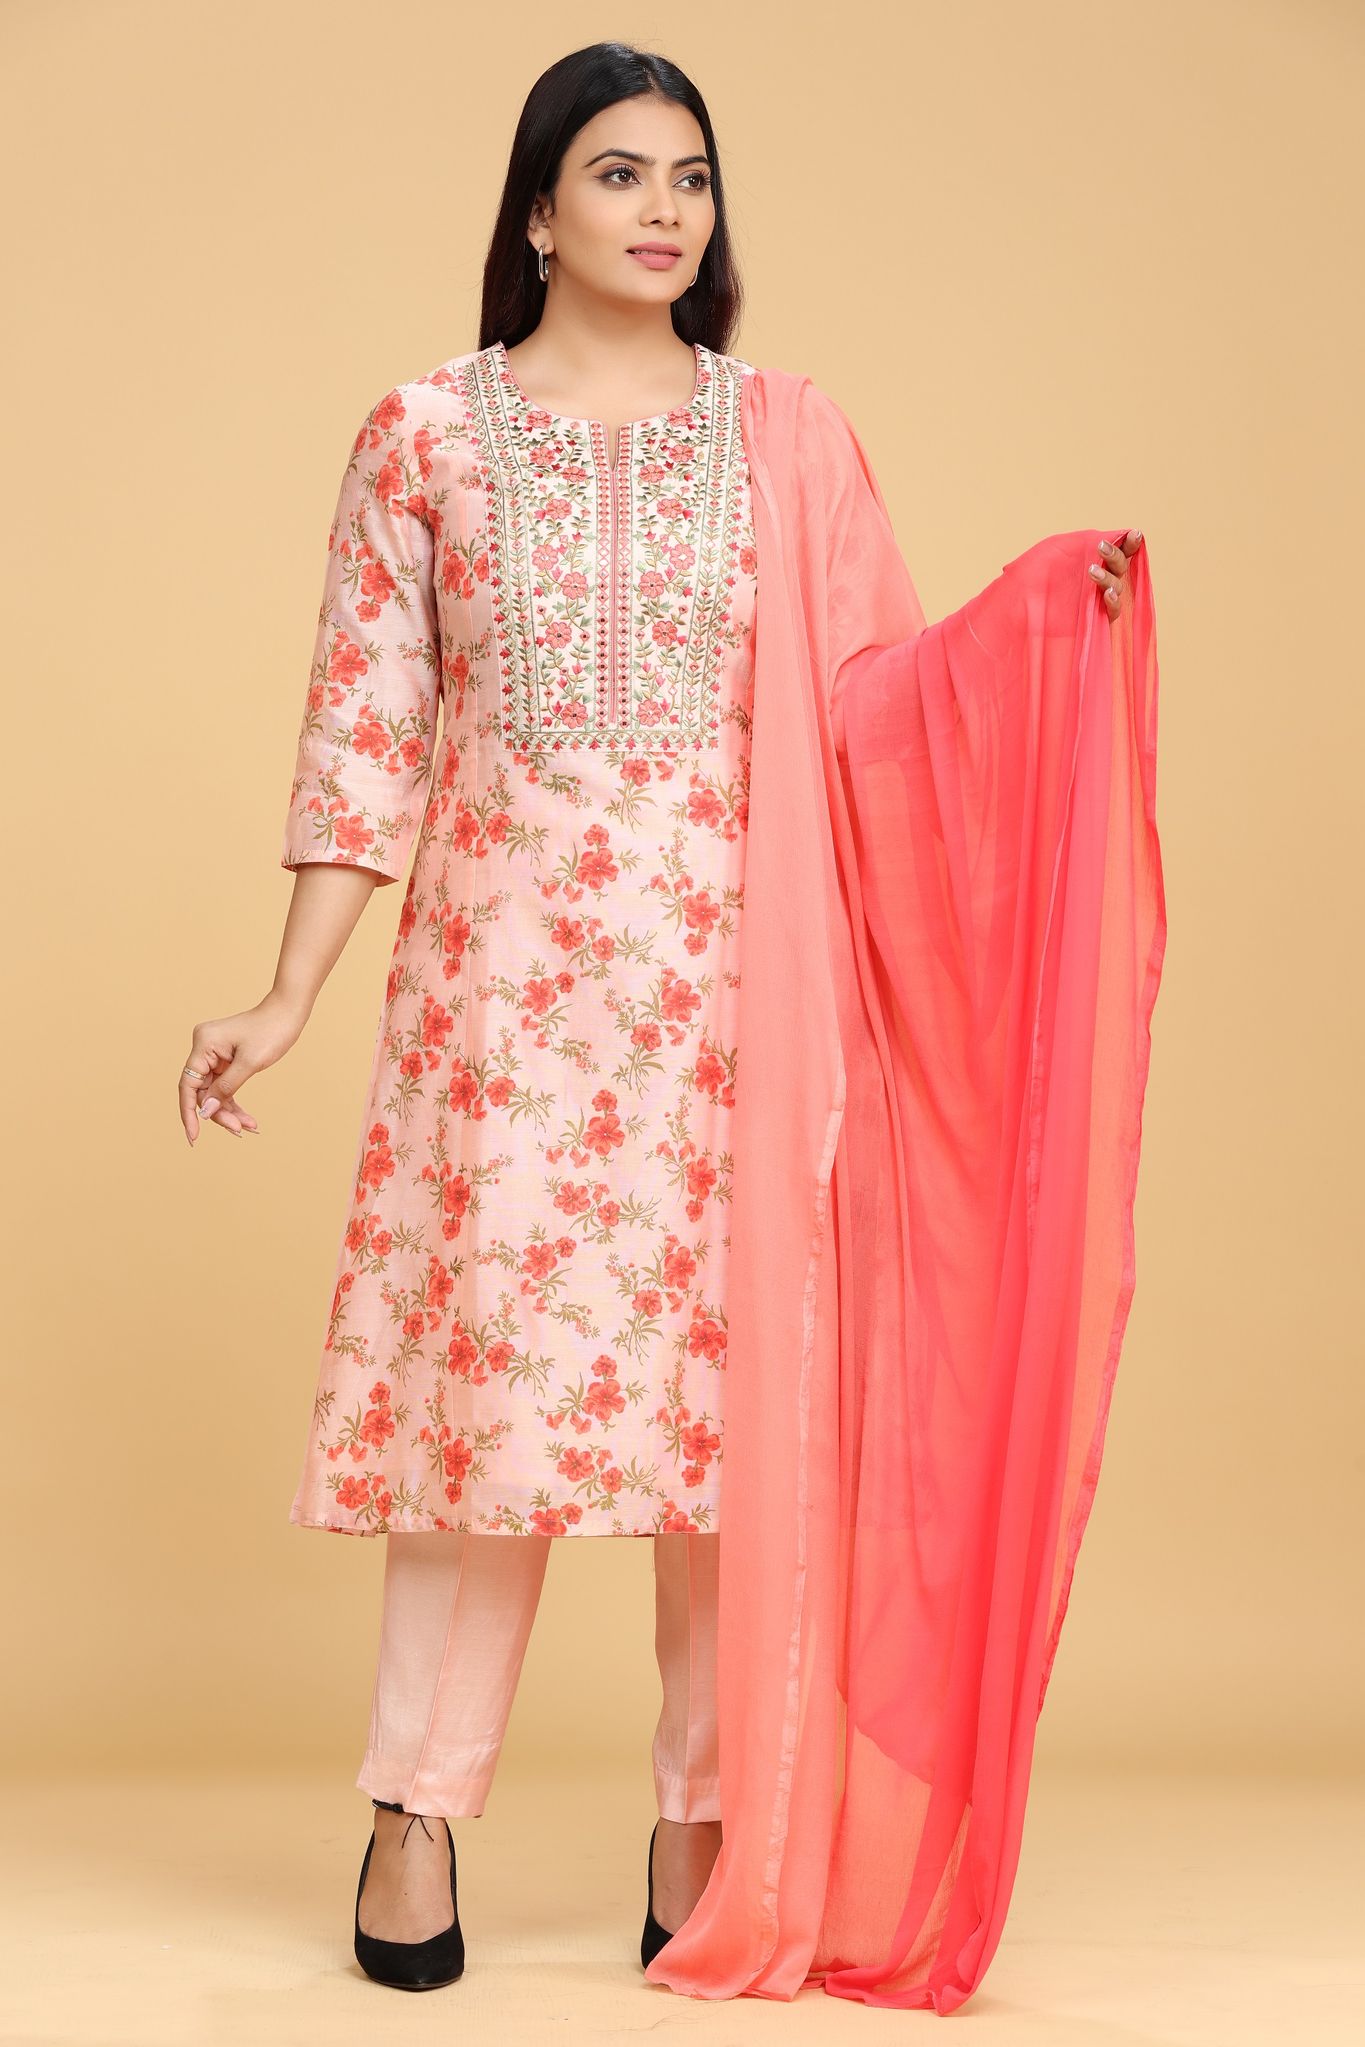 Idhitri Light Peach Cotton Chanderi Embroidered Suit Set